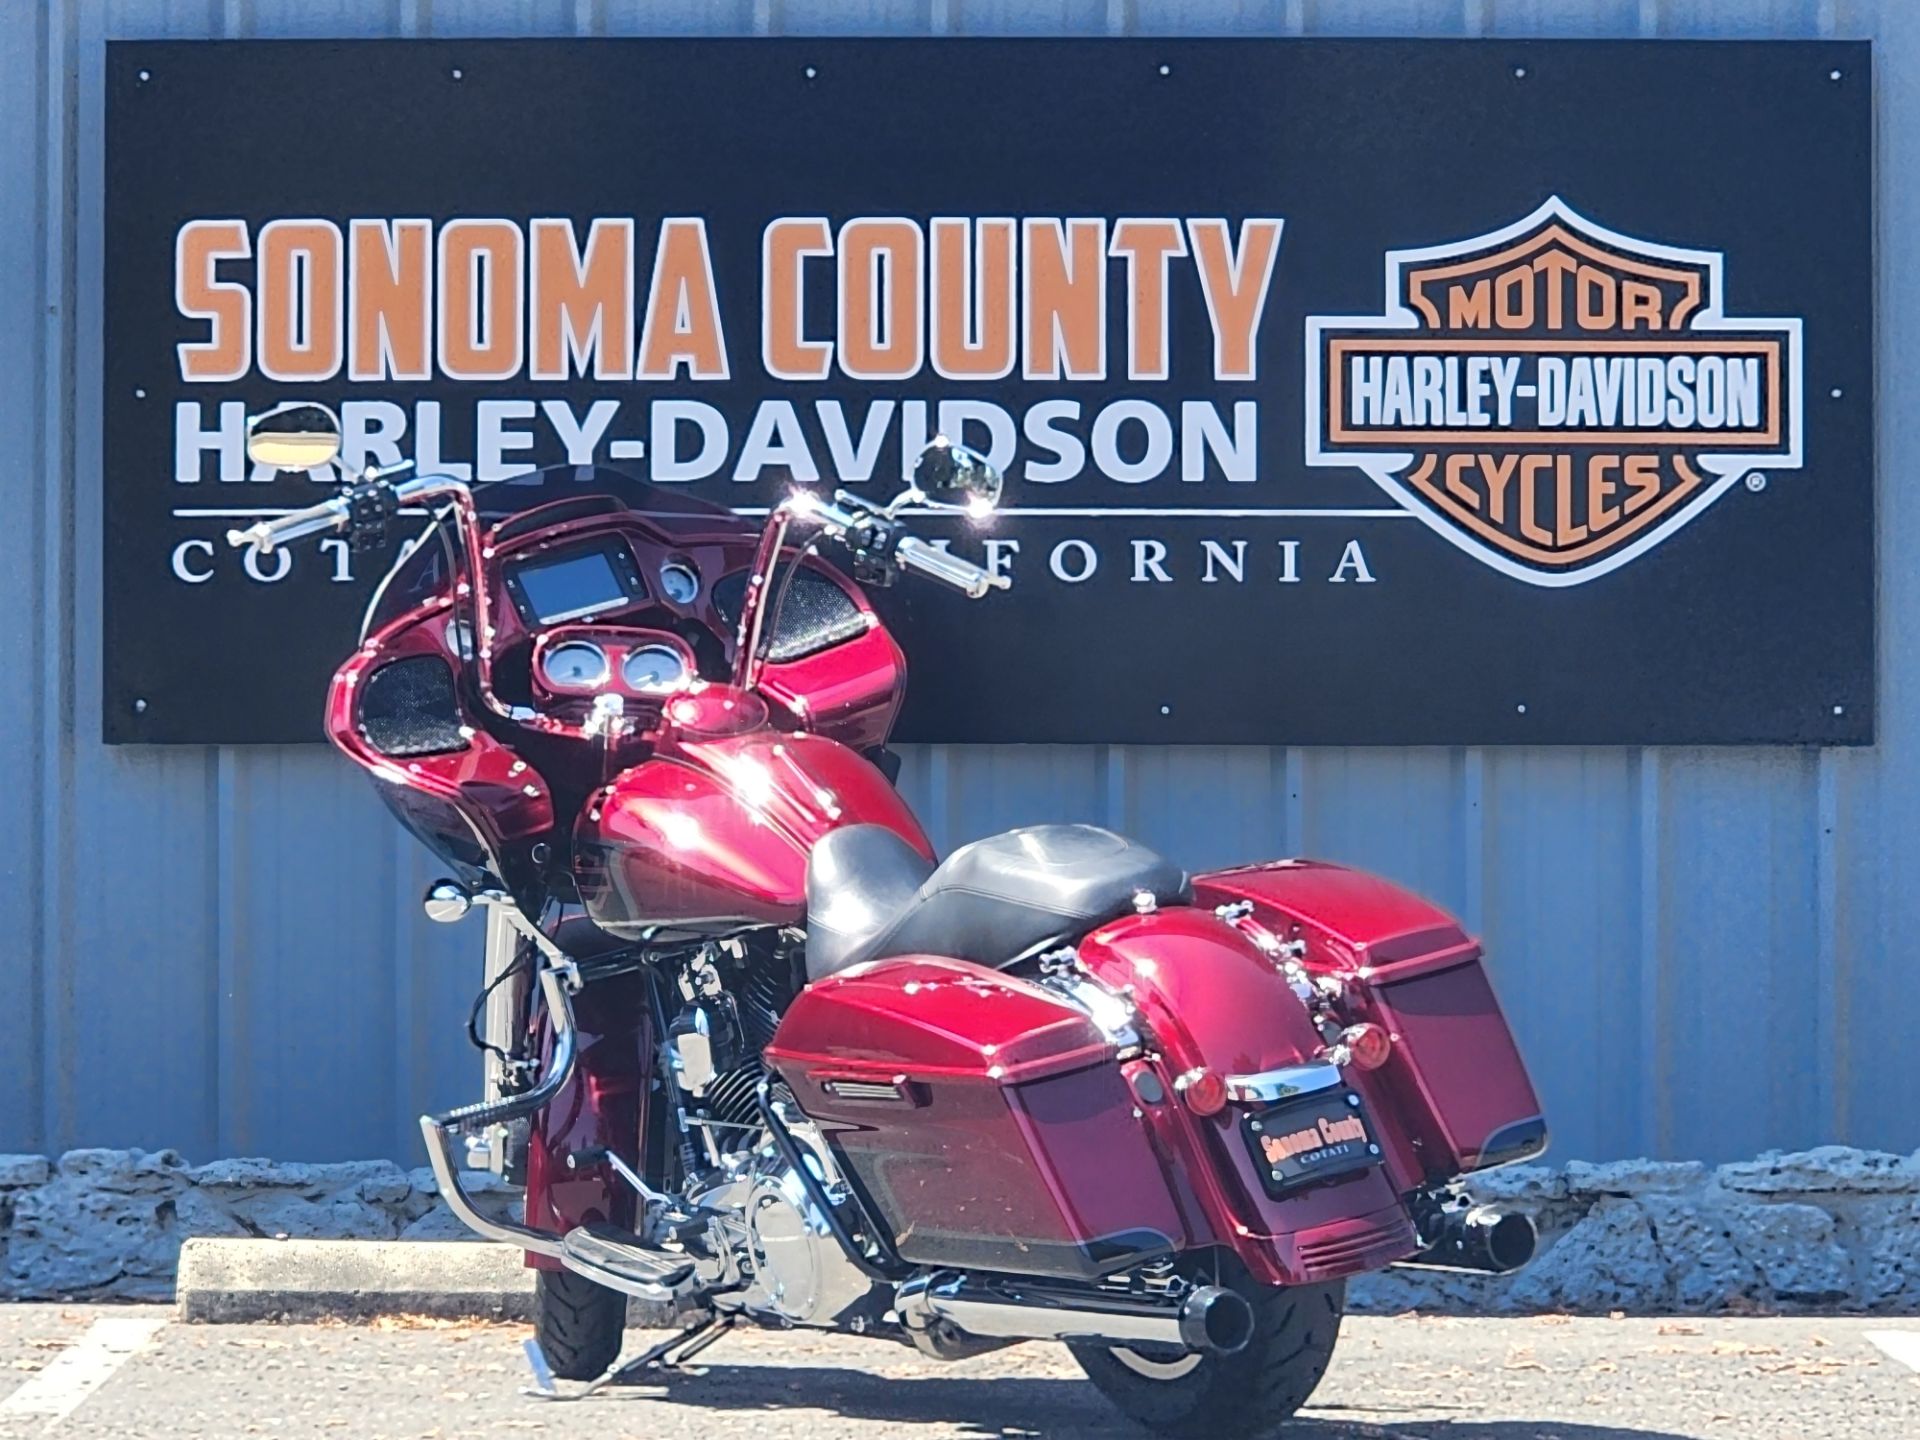 2015 Harley-Davidson Road Glide® Special in Cotati, California - Photo 4